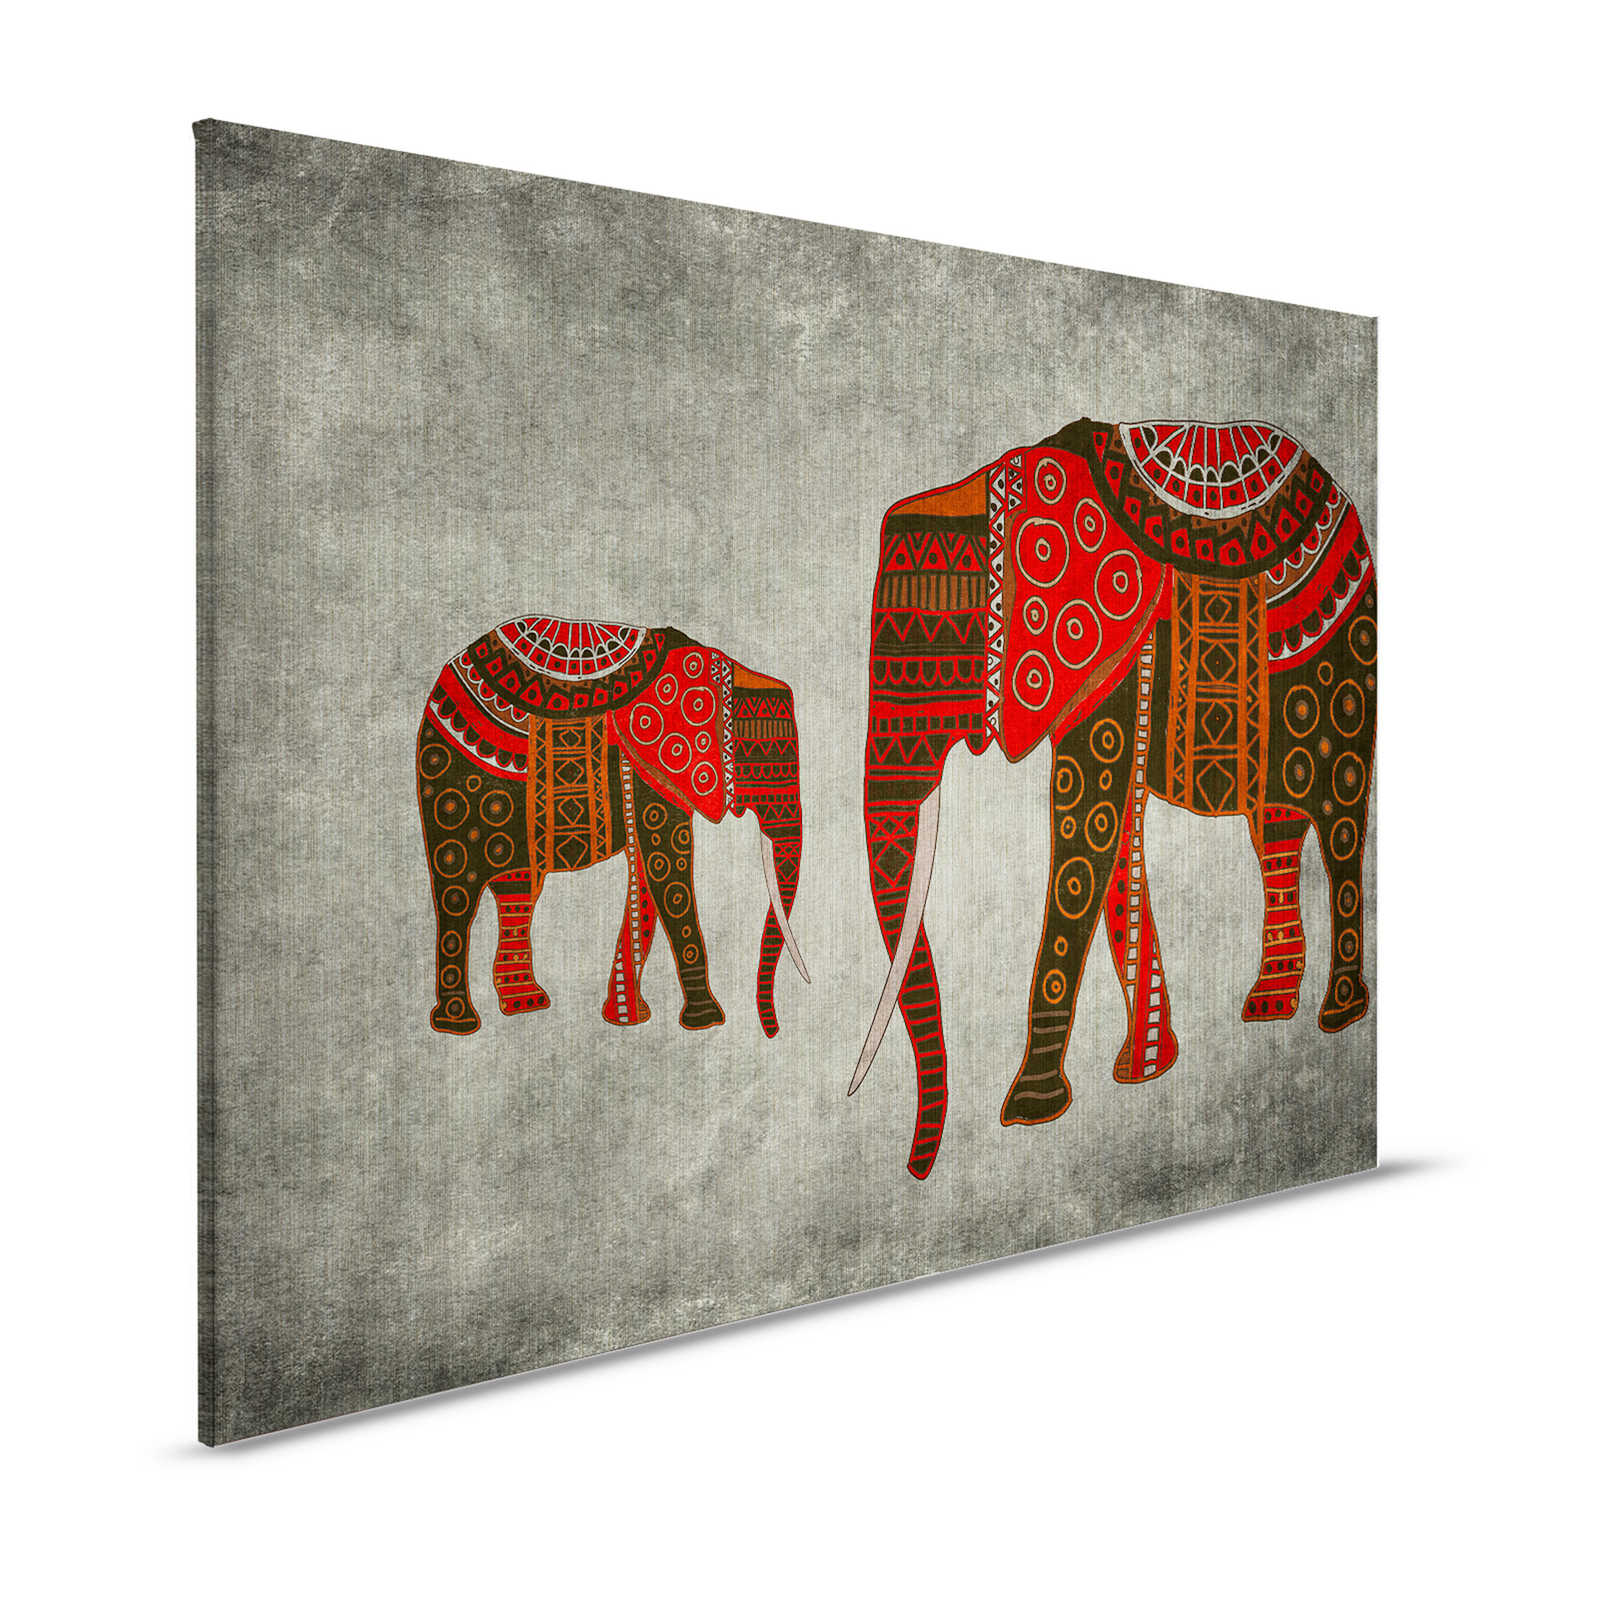 Nairobi 4 - Pintura sobre lienzo Elefantes con motivos étnicos - 1,20 m x 0,80 m
